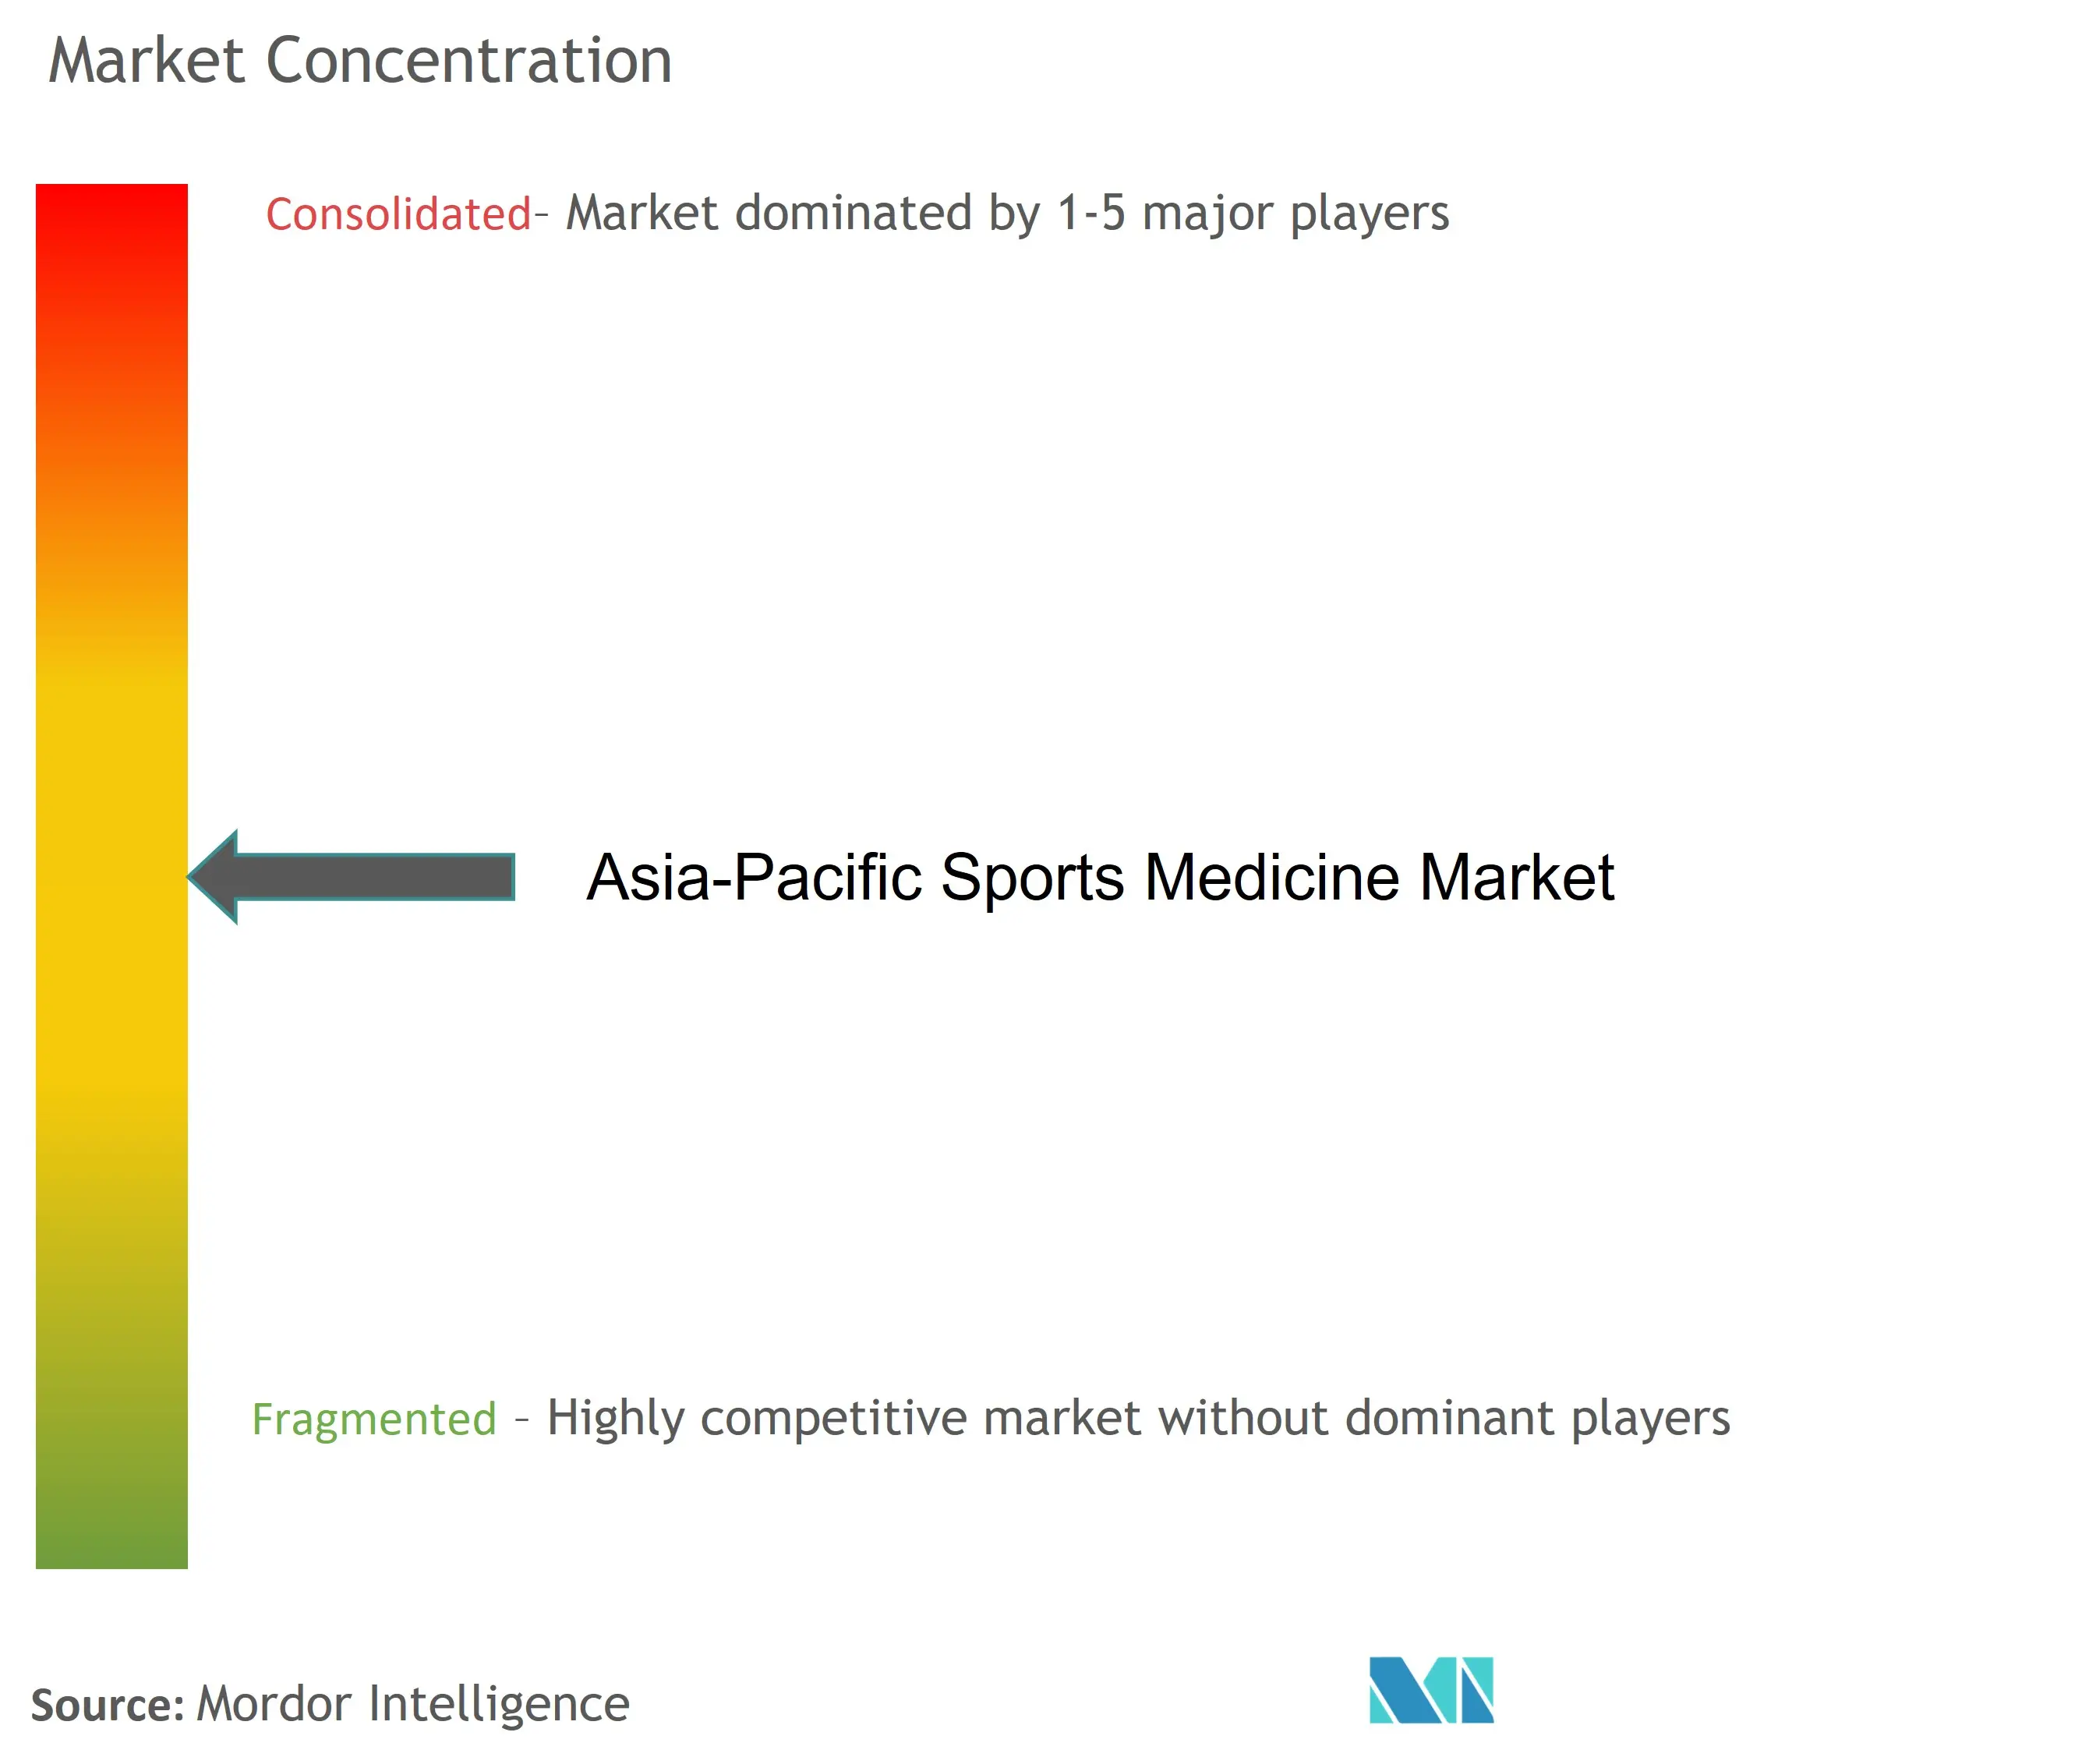 Asia-Pacific Sports Medicine Market Concentration